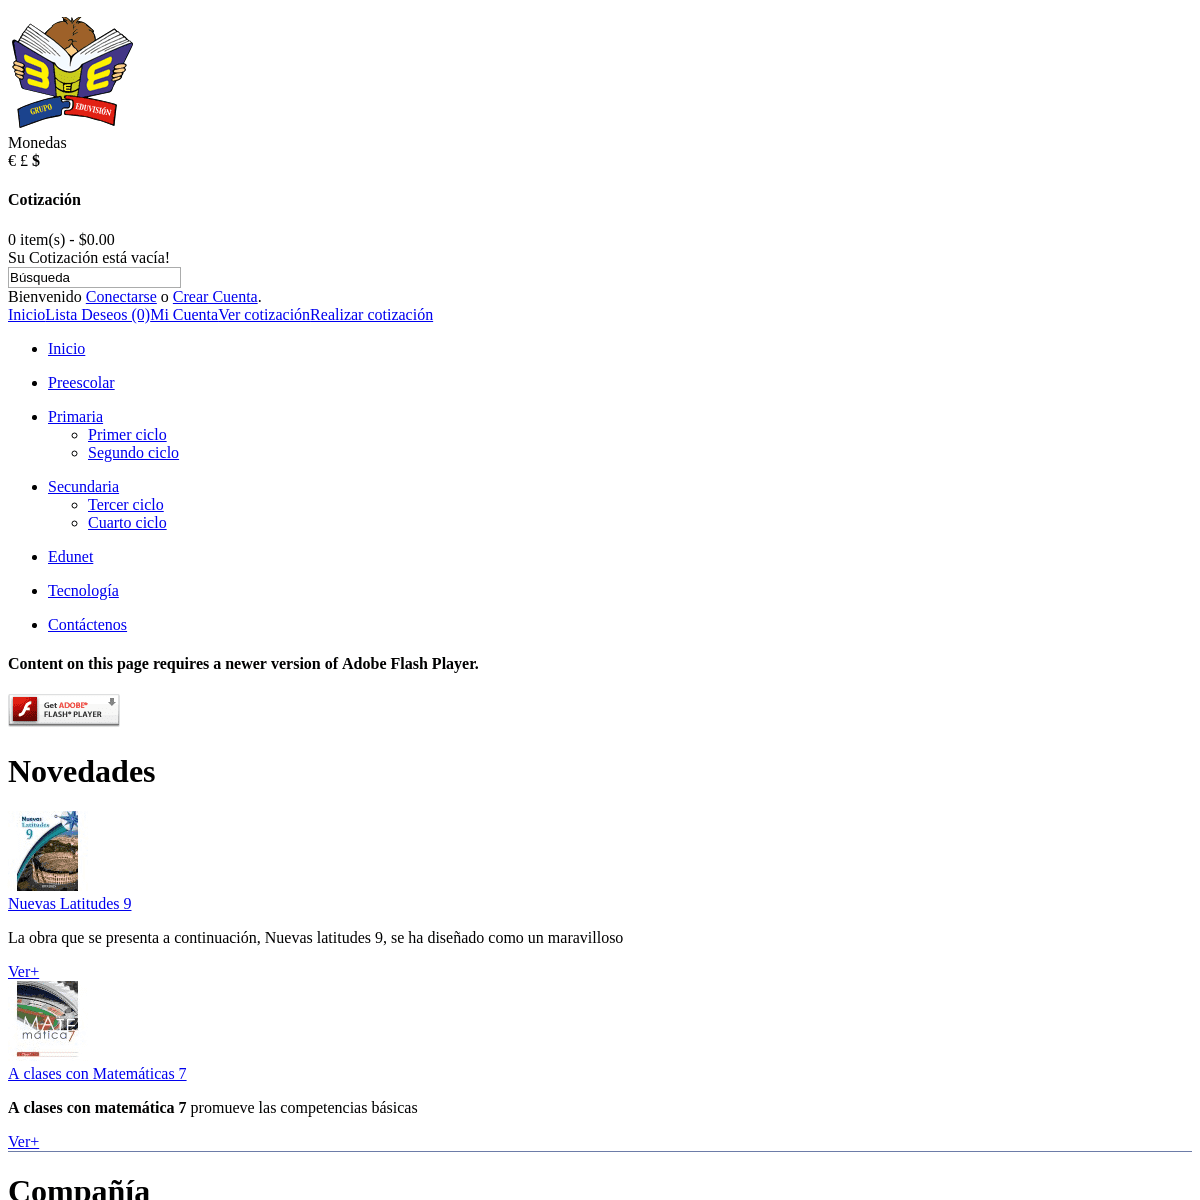 A complete backup of eduvisioncr.com